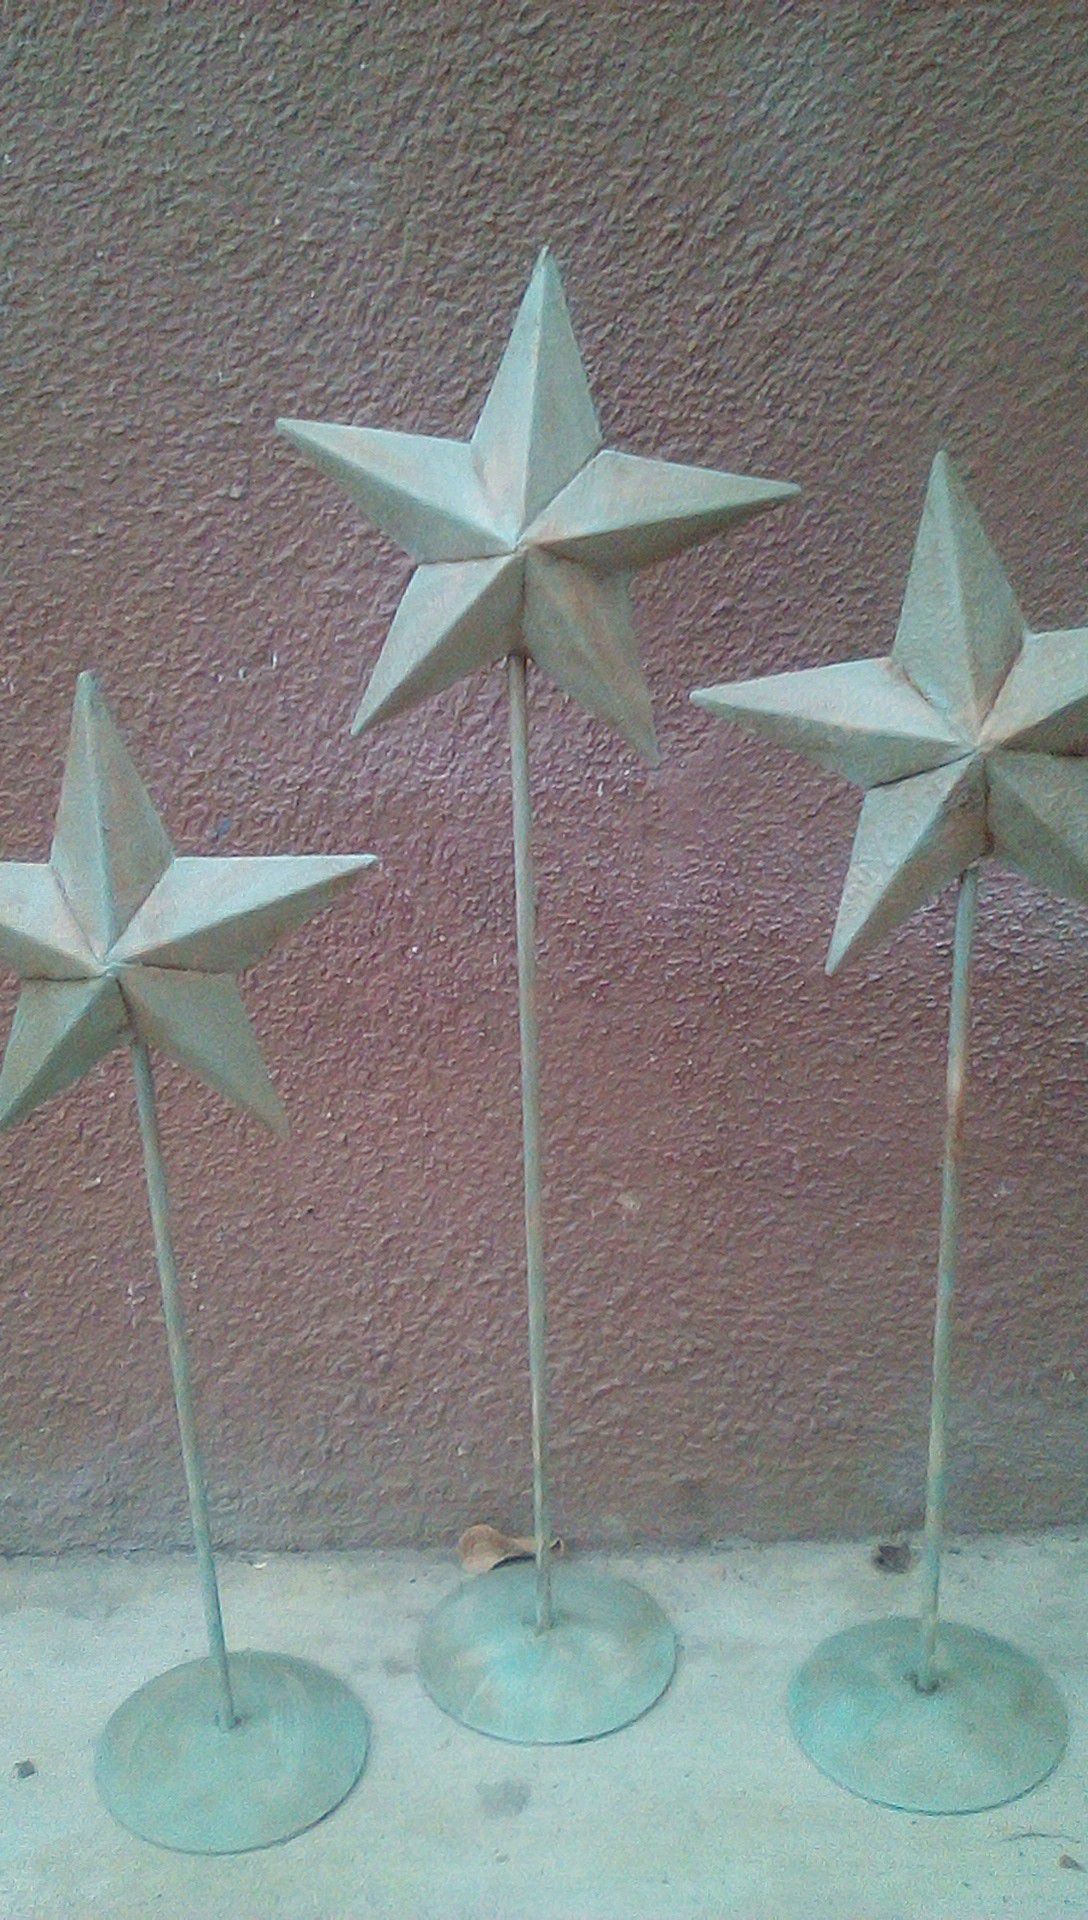 3 metal star decorations